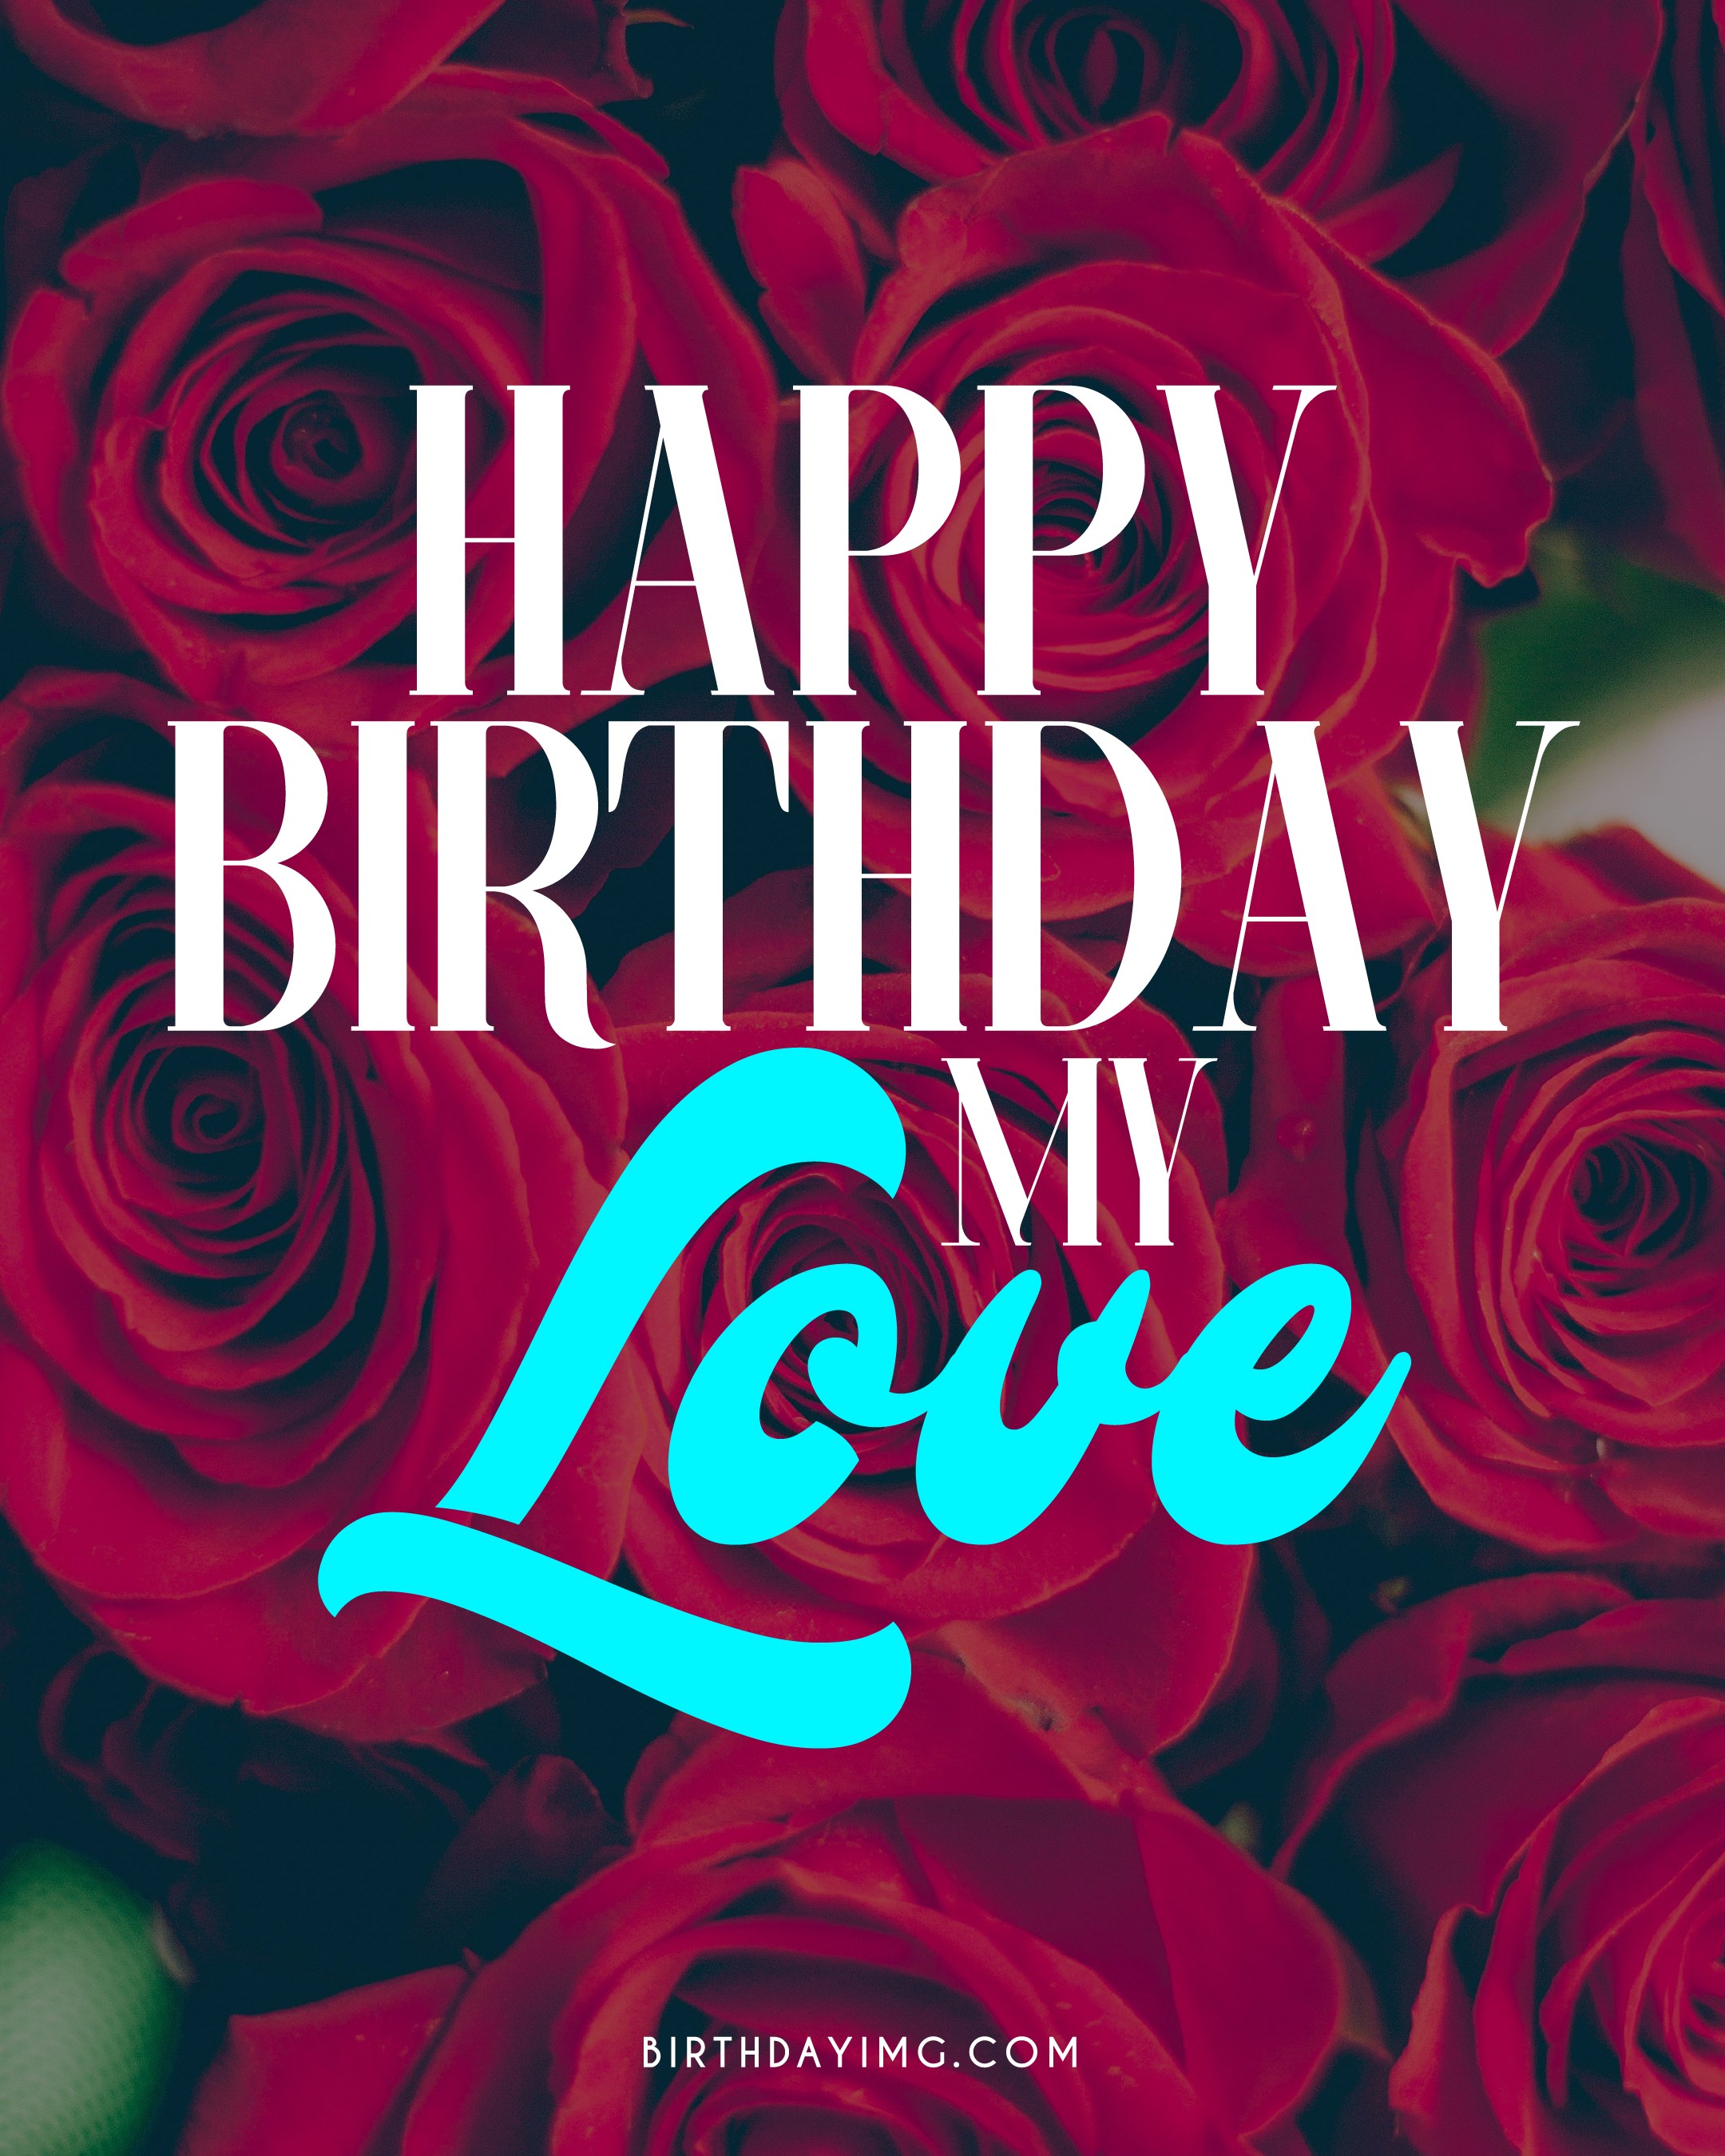 Free Happy Birthday Image with Love - birthdayimg.com